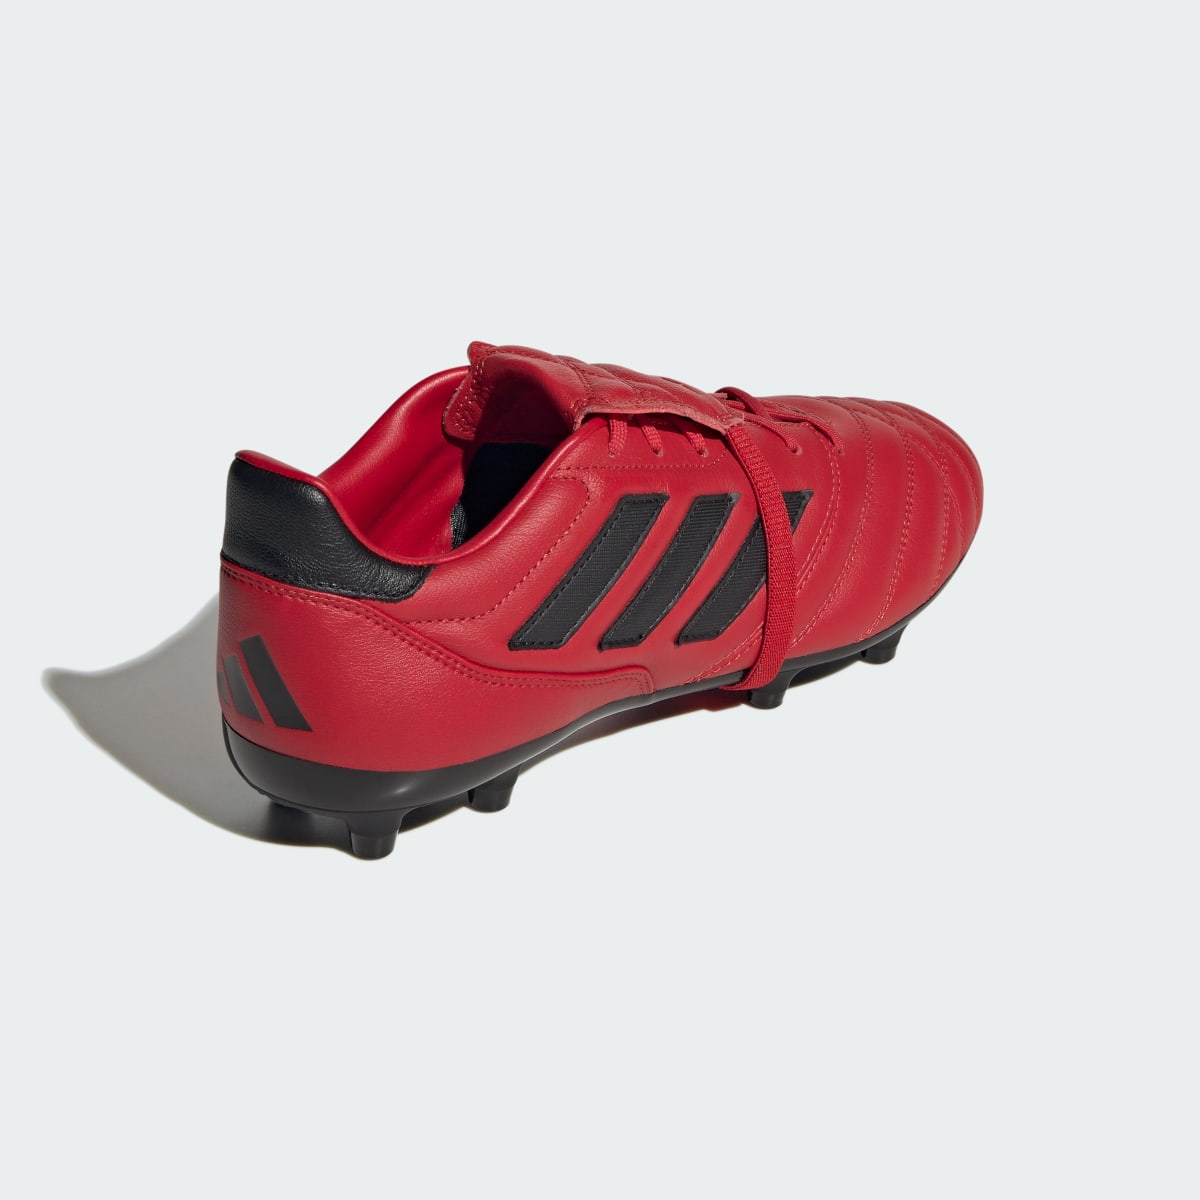 Adidas Copa Gloro Firm Ground Boots. 6